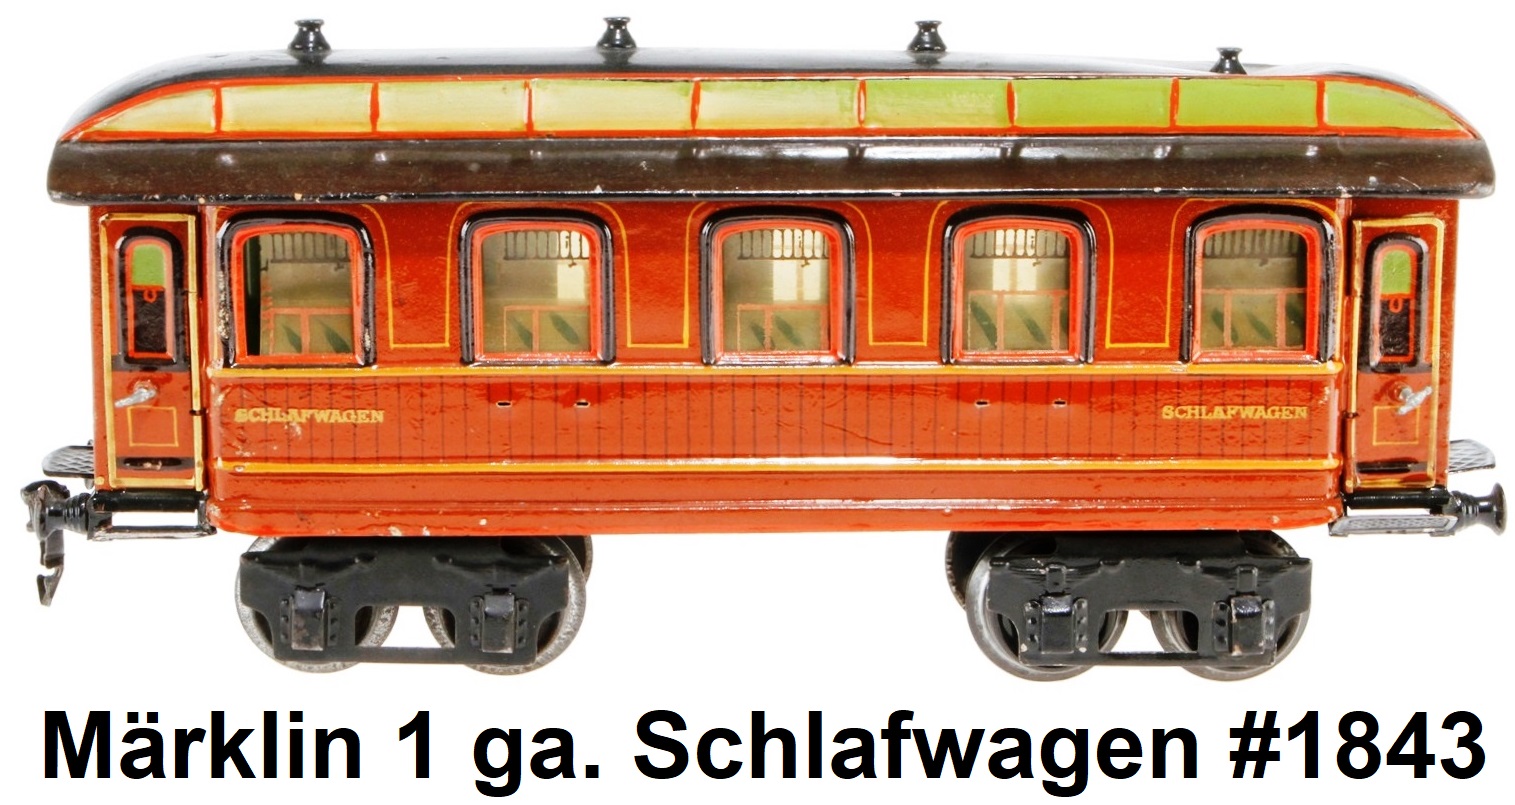 Märklin Schlafwagen #1843 in 1 gauge